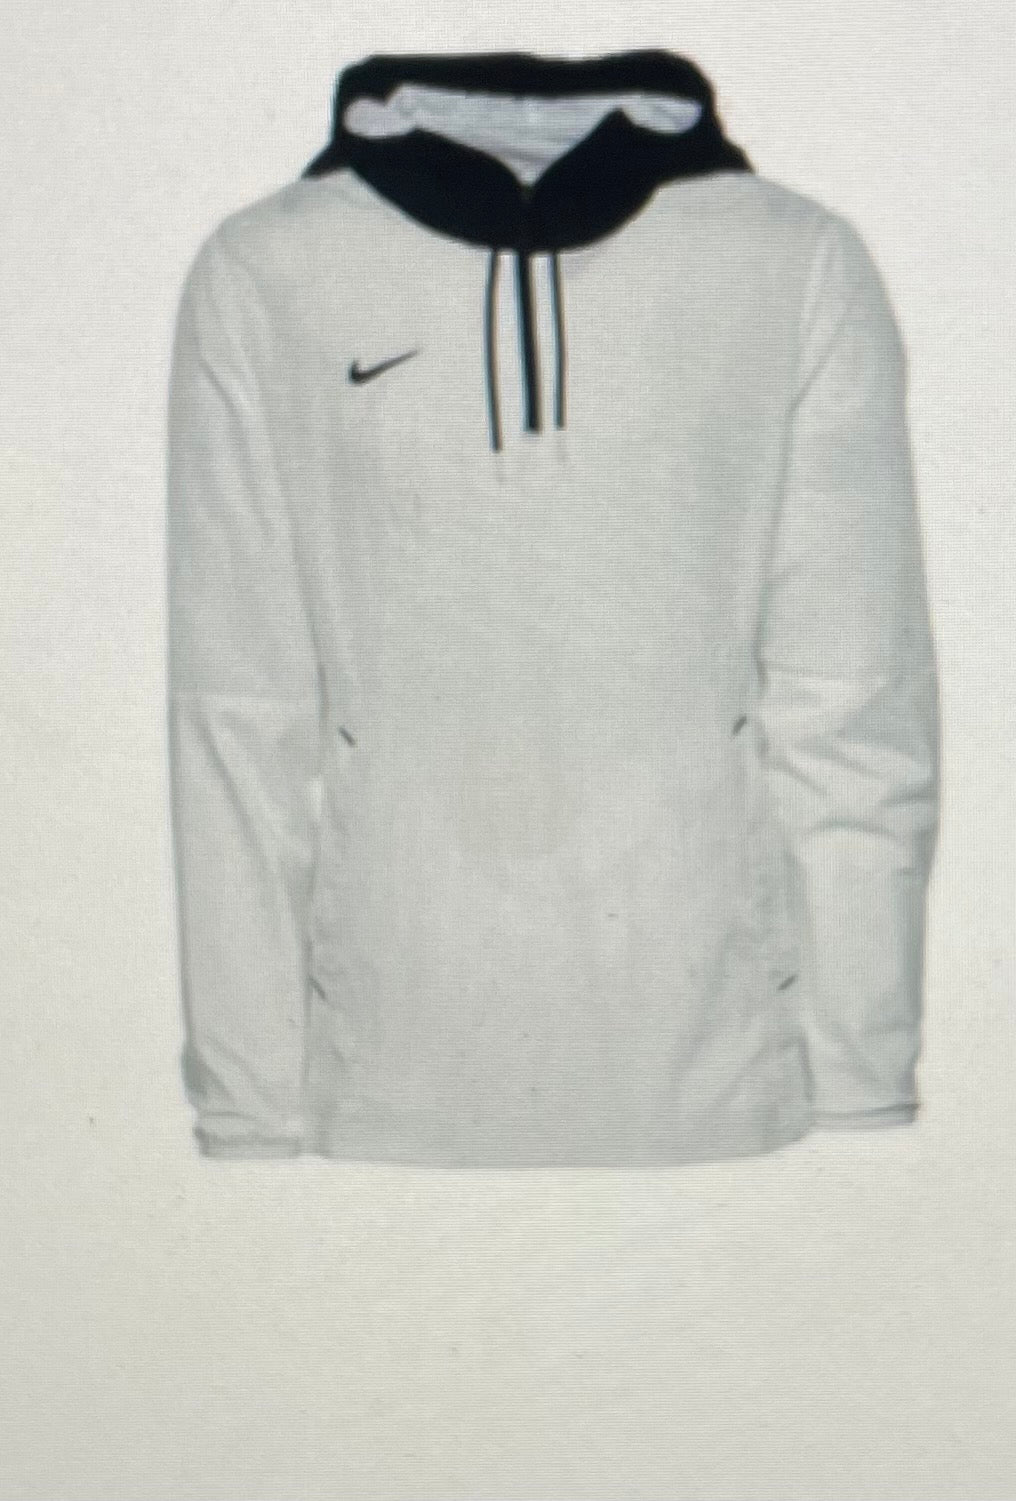 Nike Sideline Player's Jacket